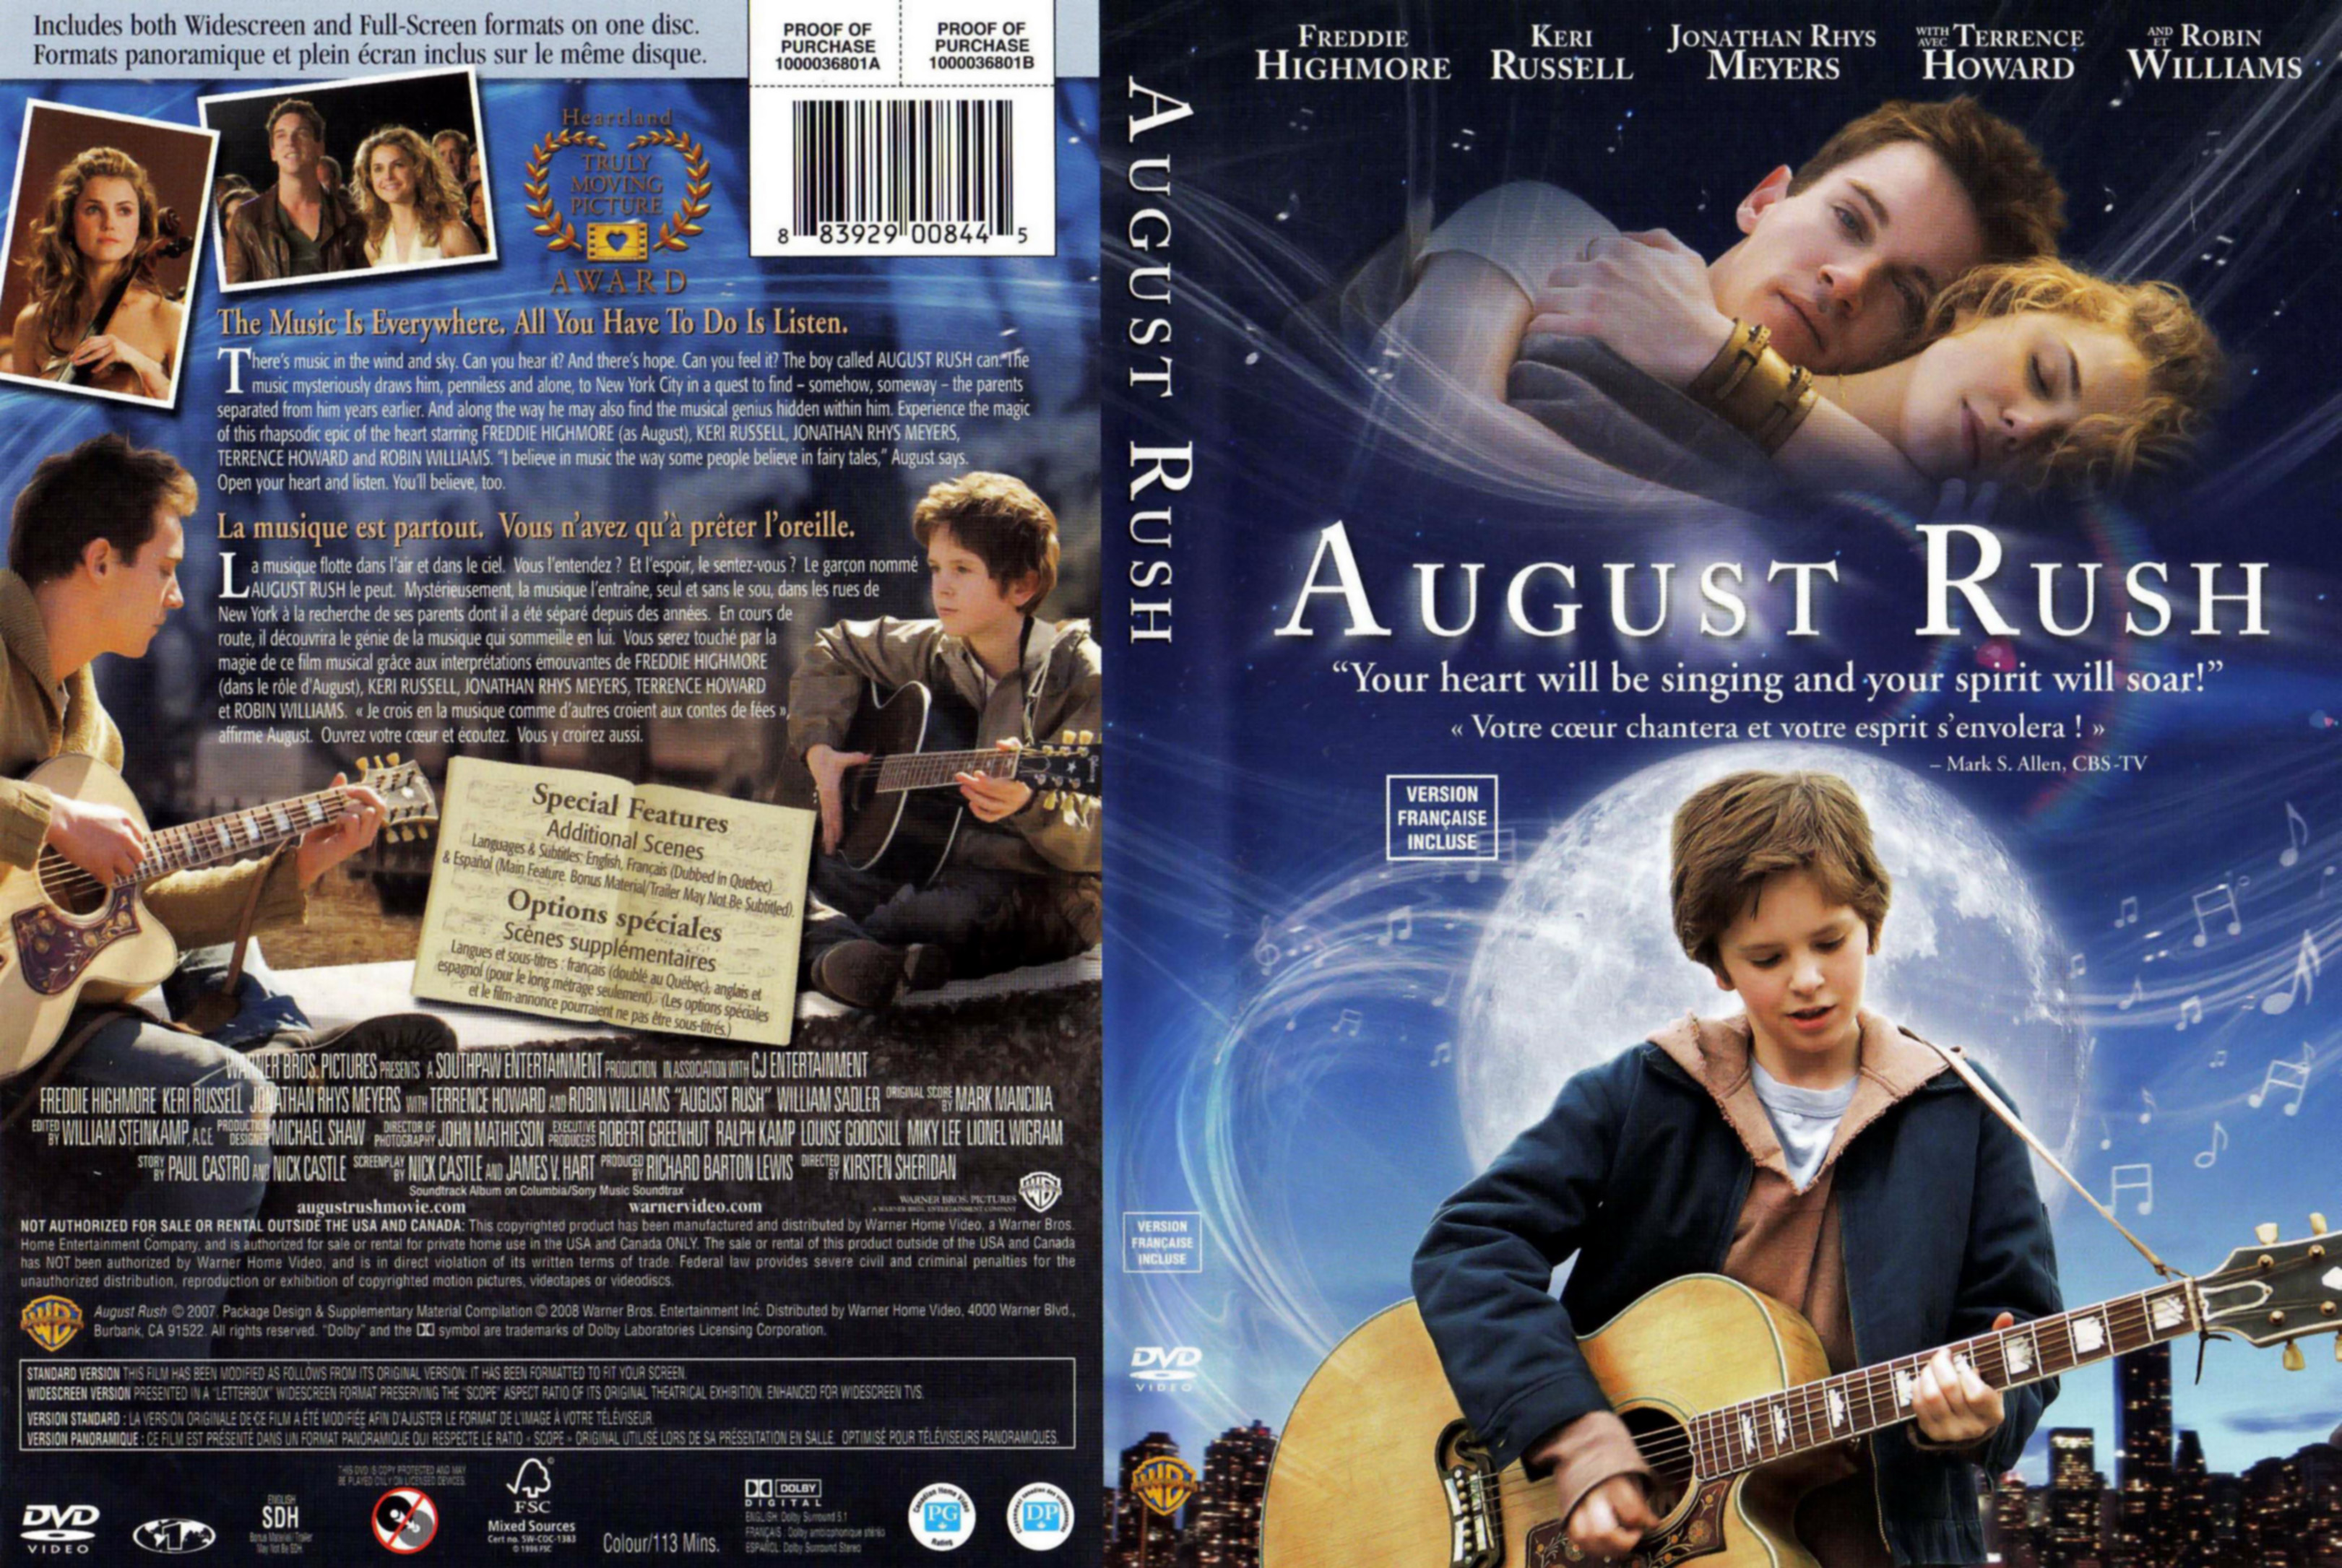 Jaquette DVD August rush v2